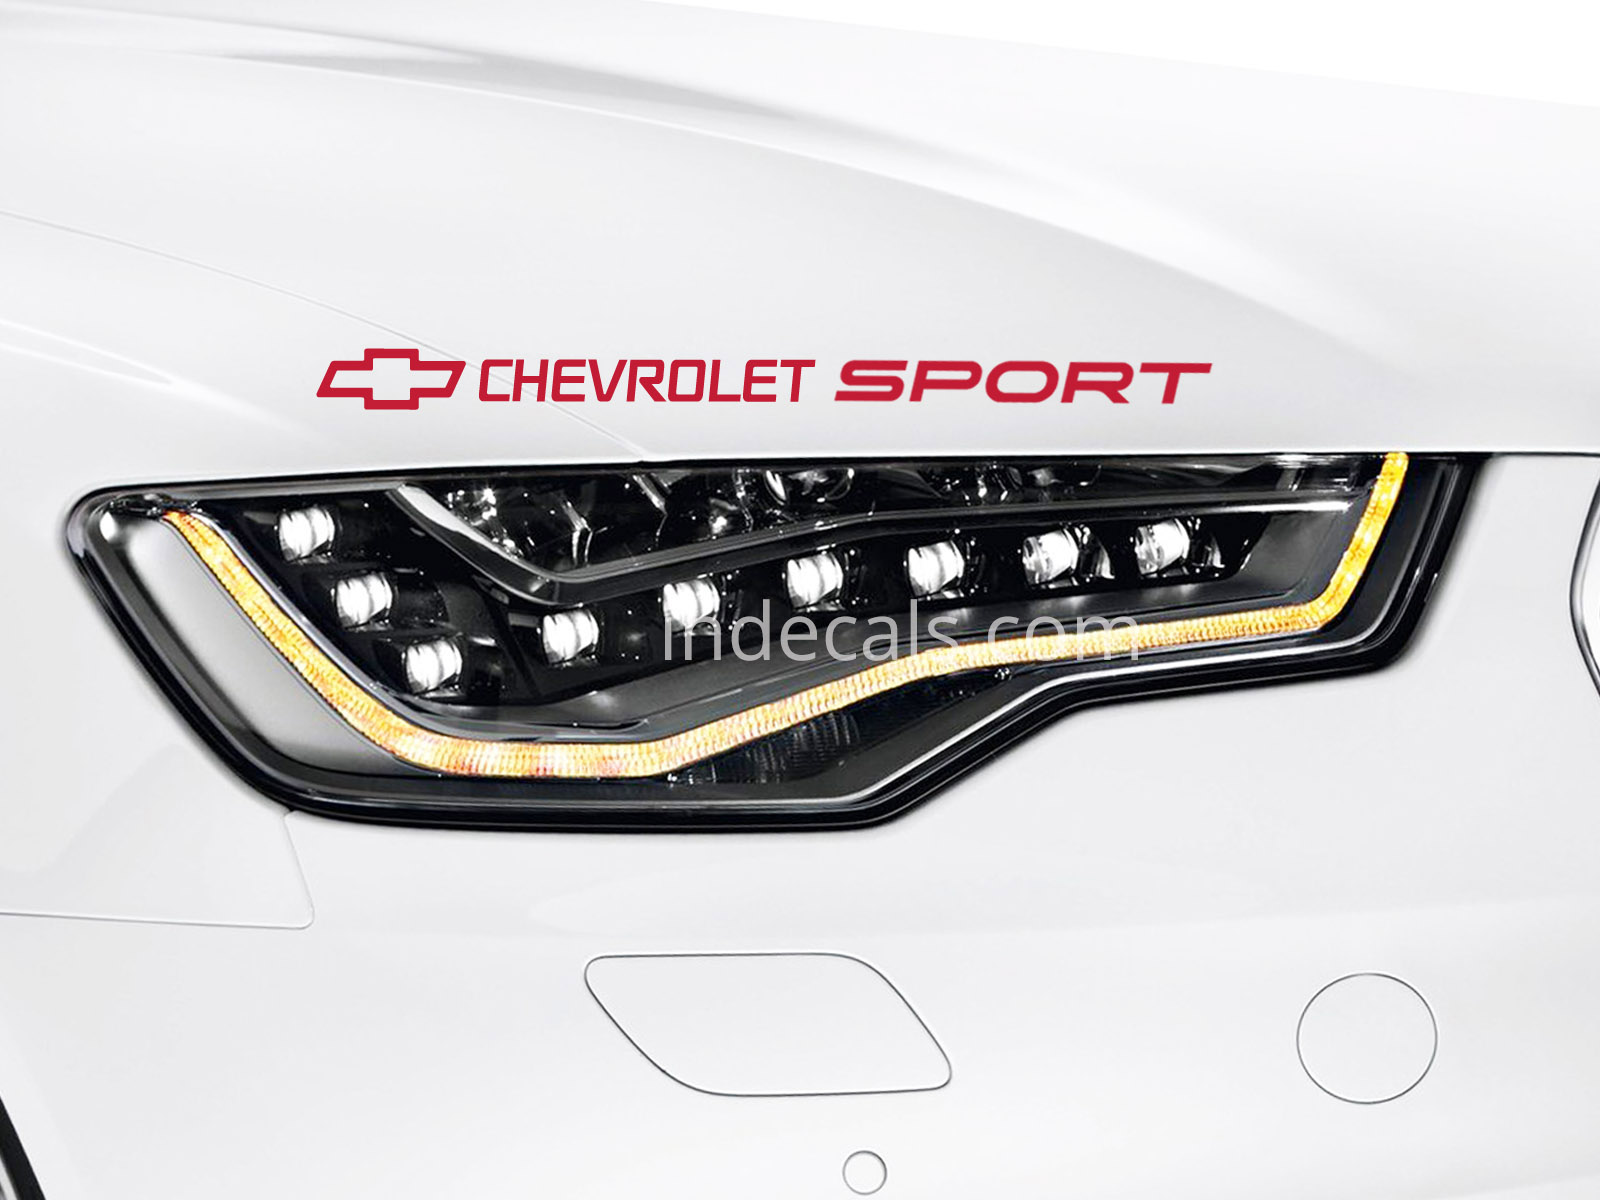 1 x Chevrolet Sport Sticker - Red